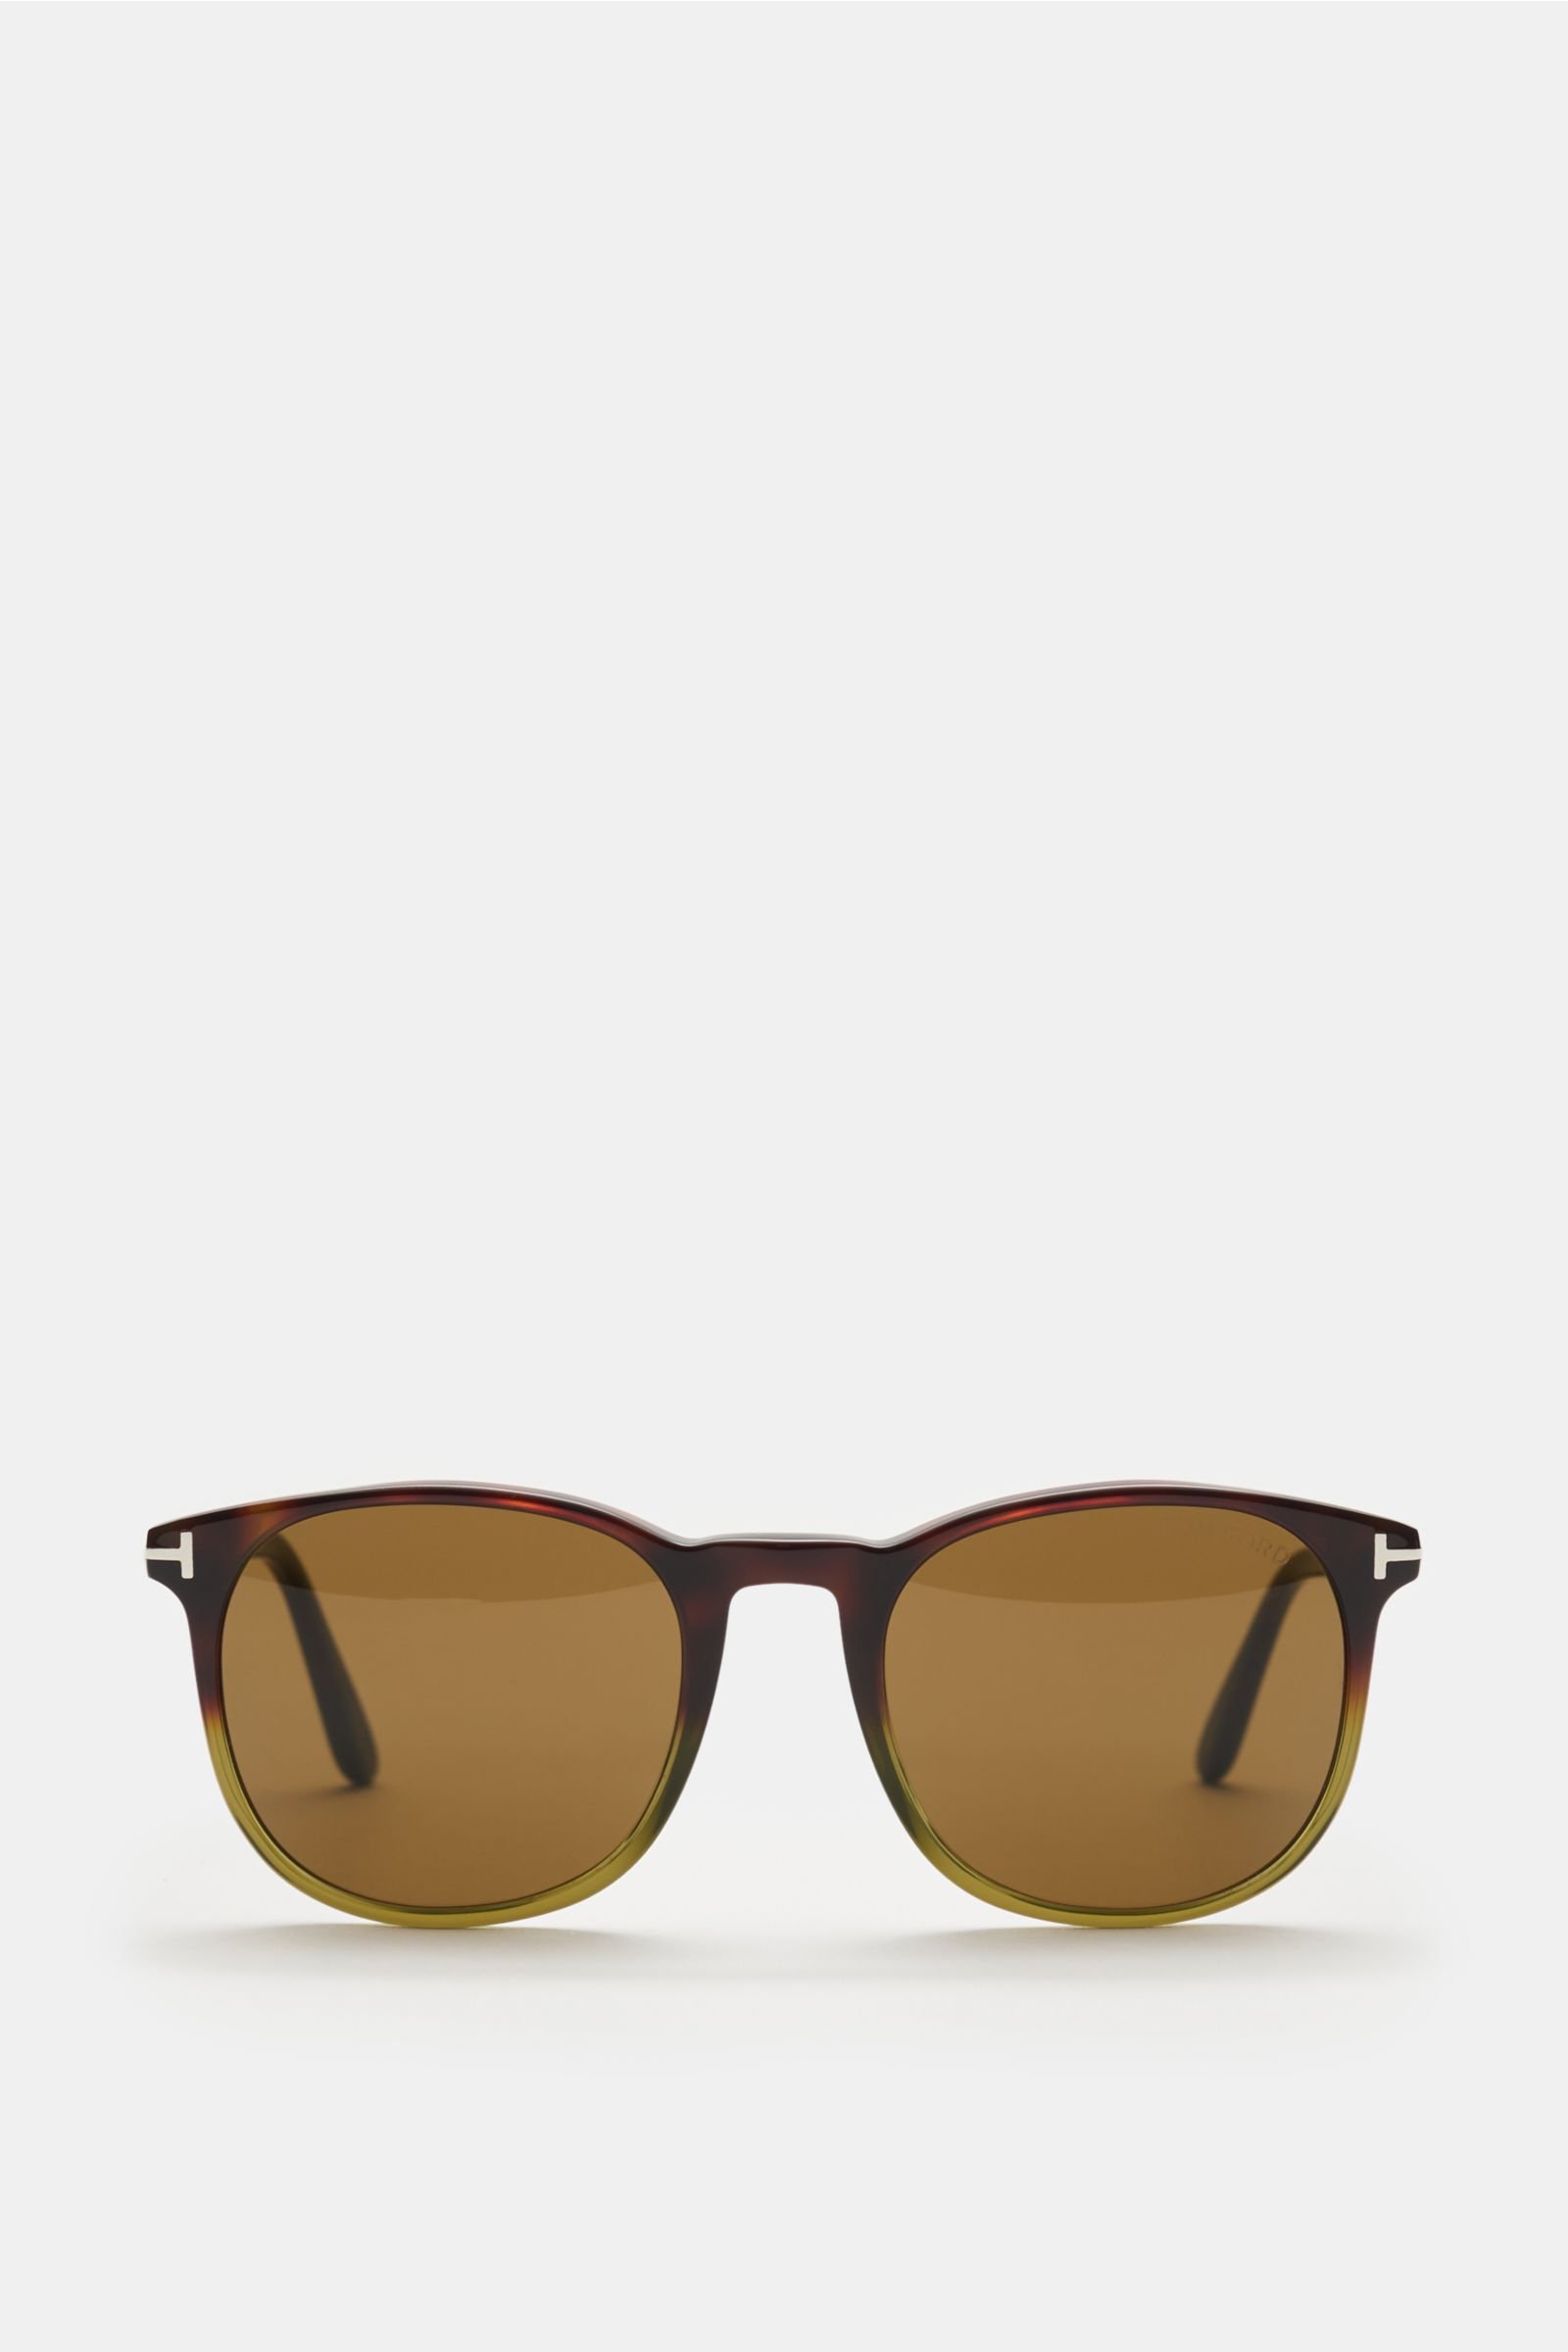 Sunglasses 'Ansel' dark brown/grey-green/brown